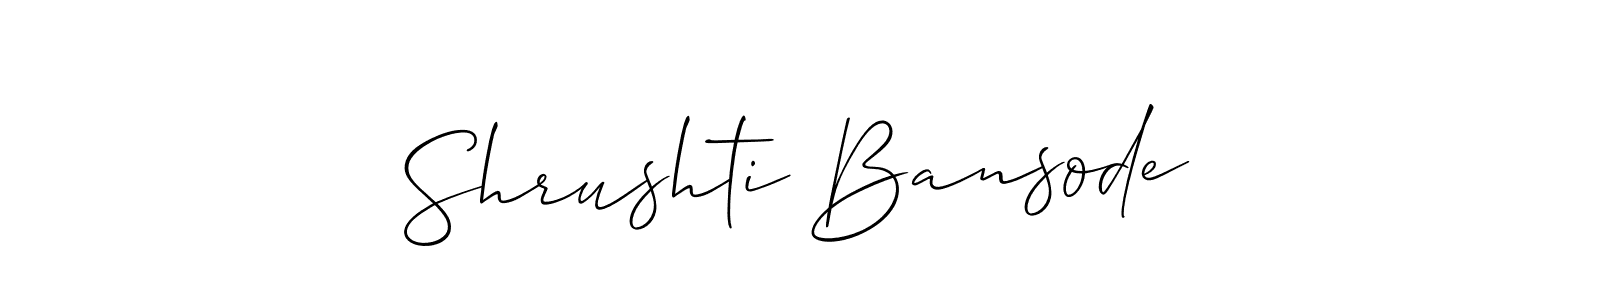 How to make Shrushti Bansode signature? Allison_Script is a professional autograph style. Create handwritten signature for Shrushti Bansode name. Shrushti Bansode signature style 2 images and pictures png